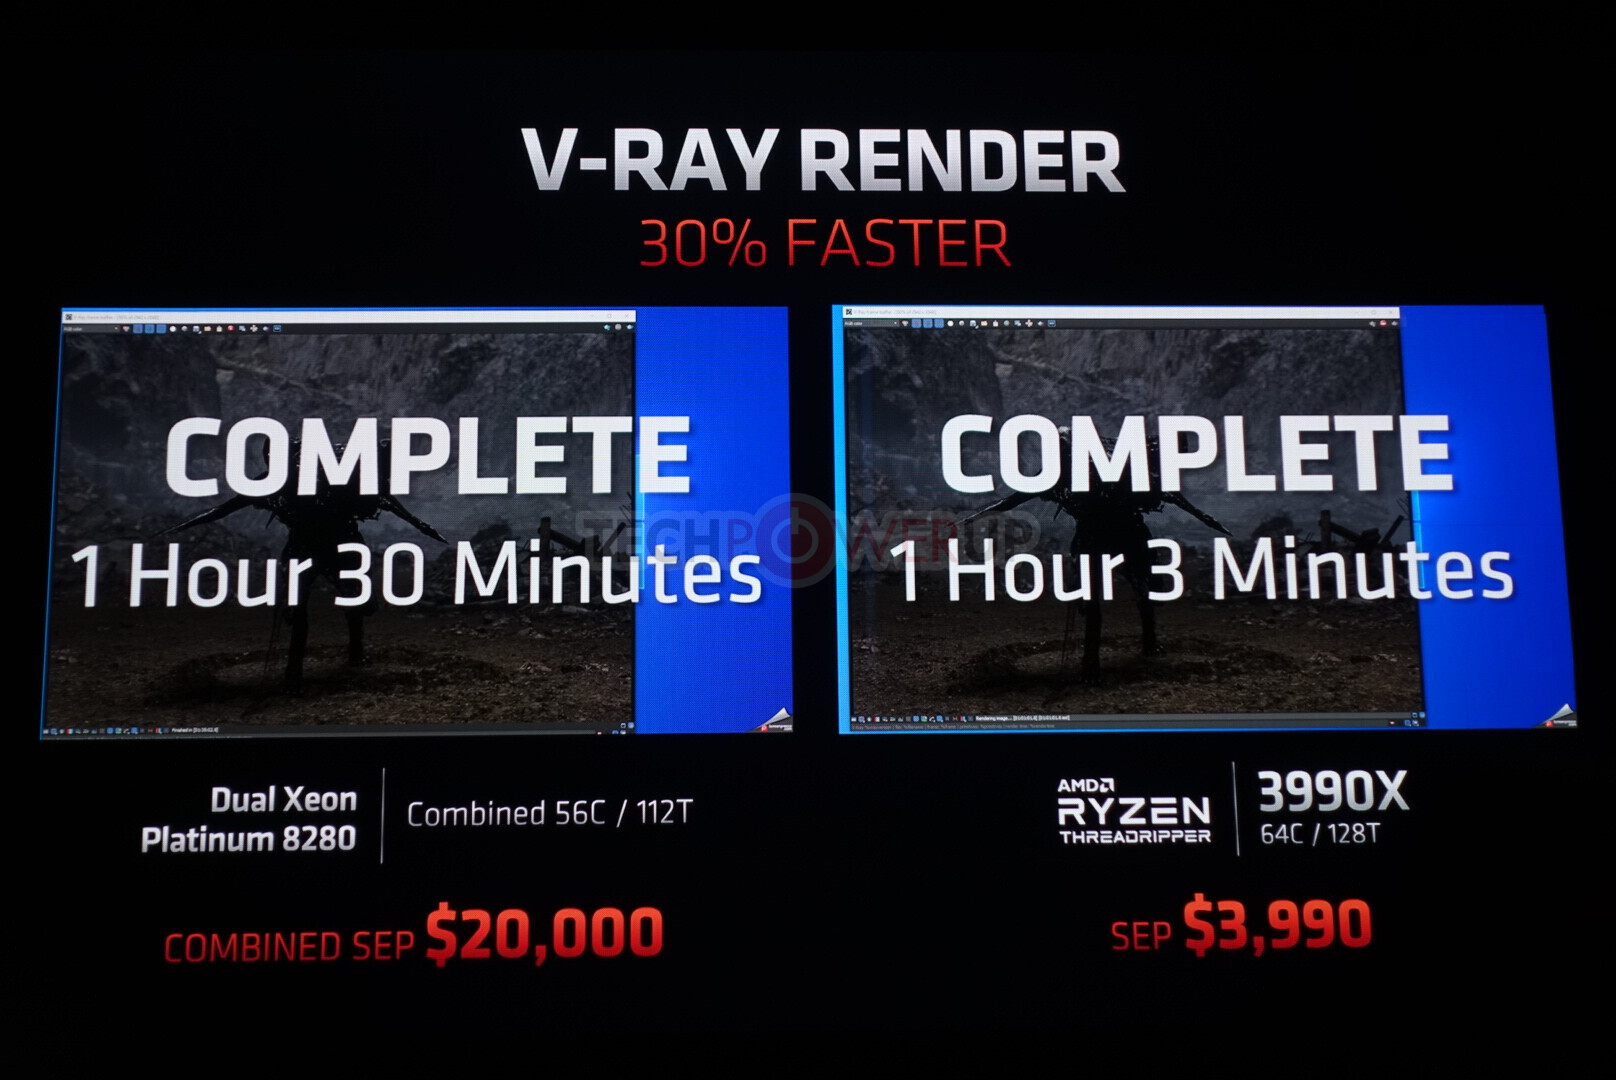 AMD Ryzen Threadripper 3990WX: 64C/128T for your next desktop?!